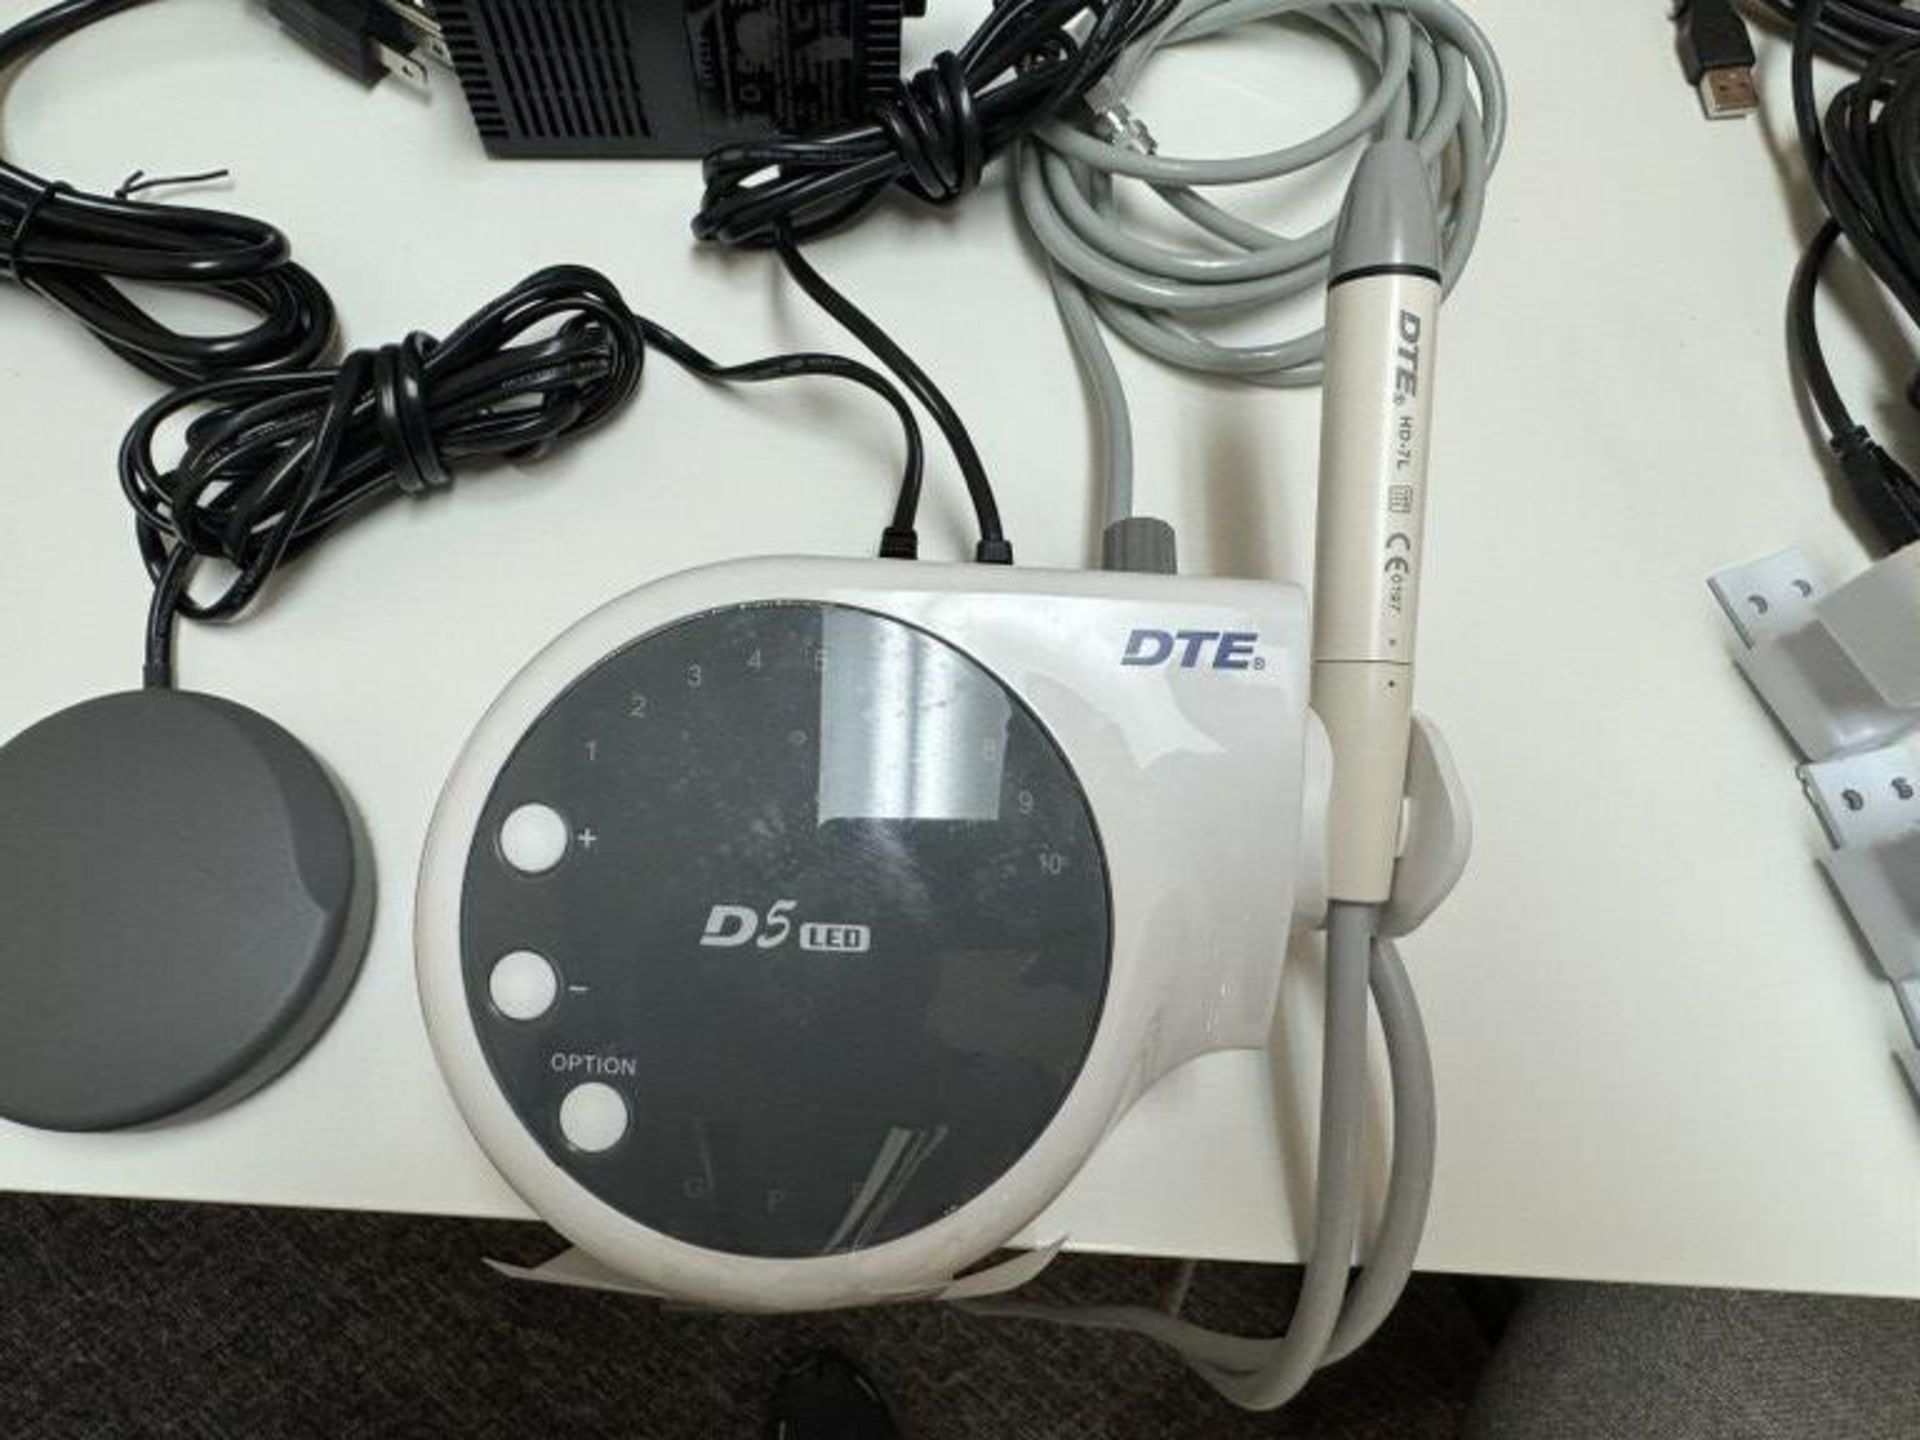 DTE ULTRASONIC SCALIER, MODEL: D5 LED SYSTEM - Image 2 of 3